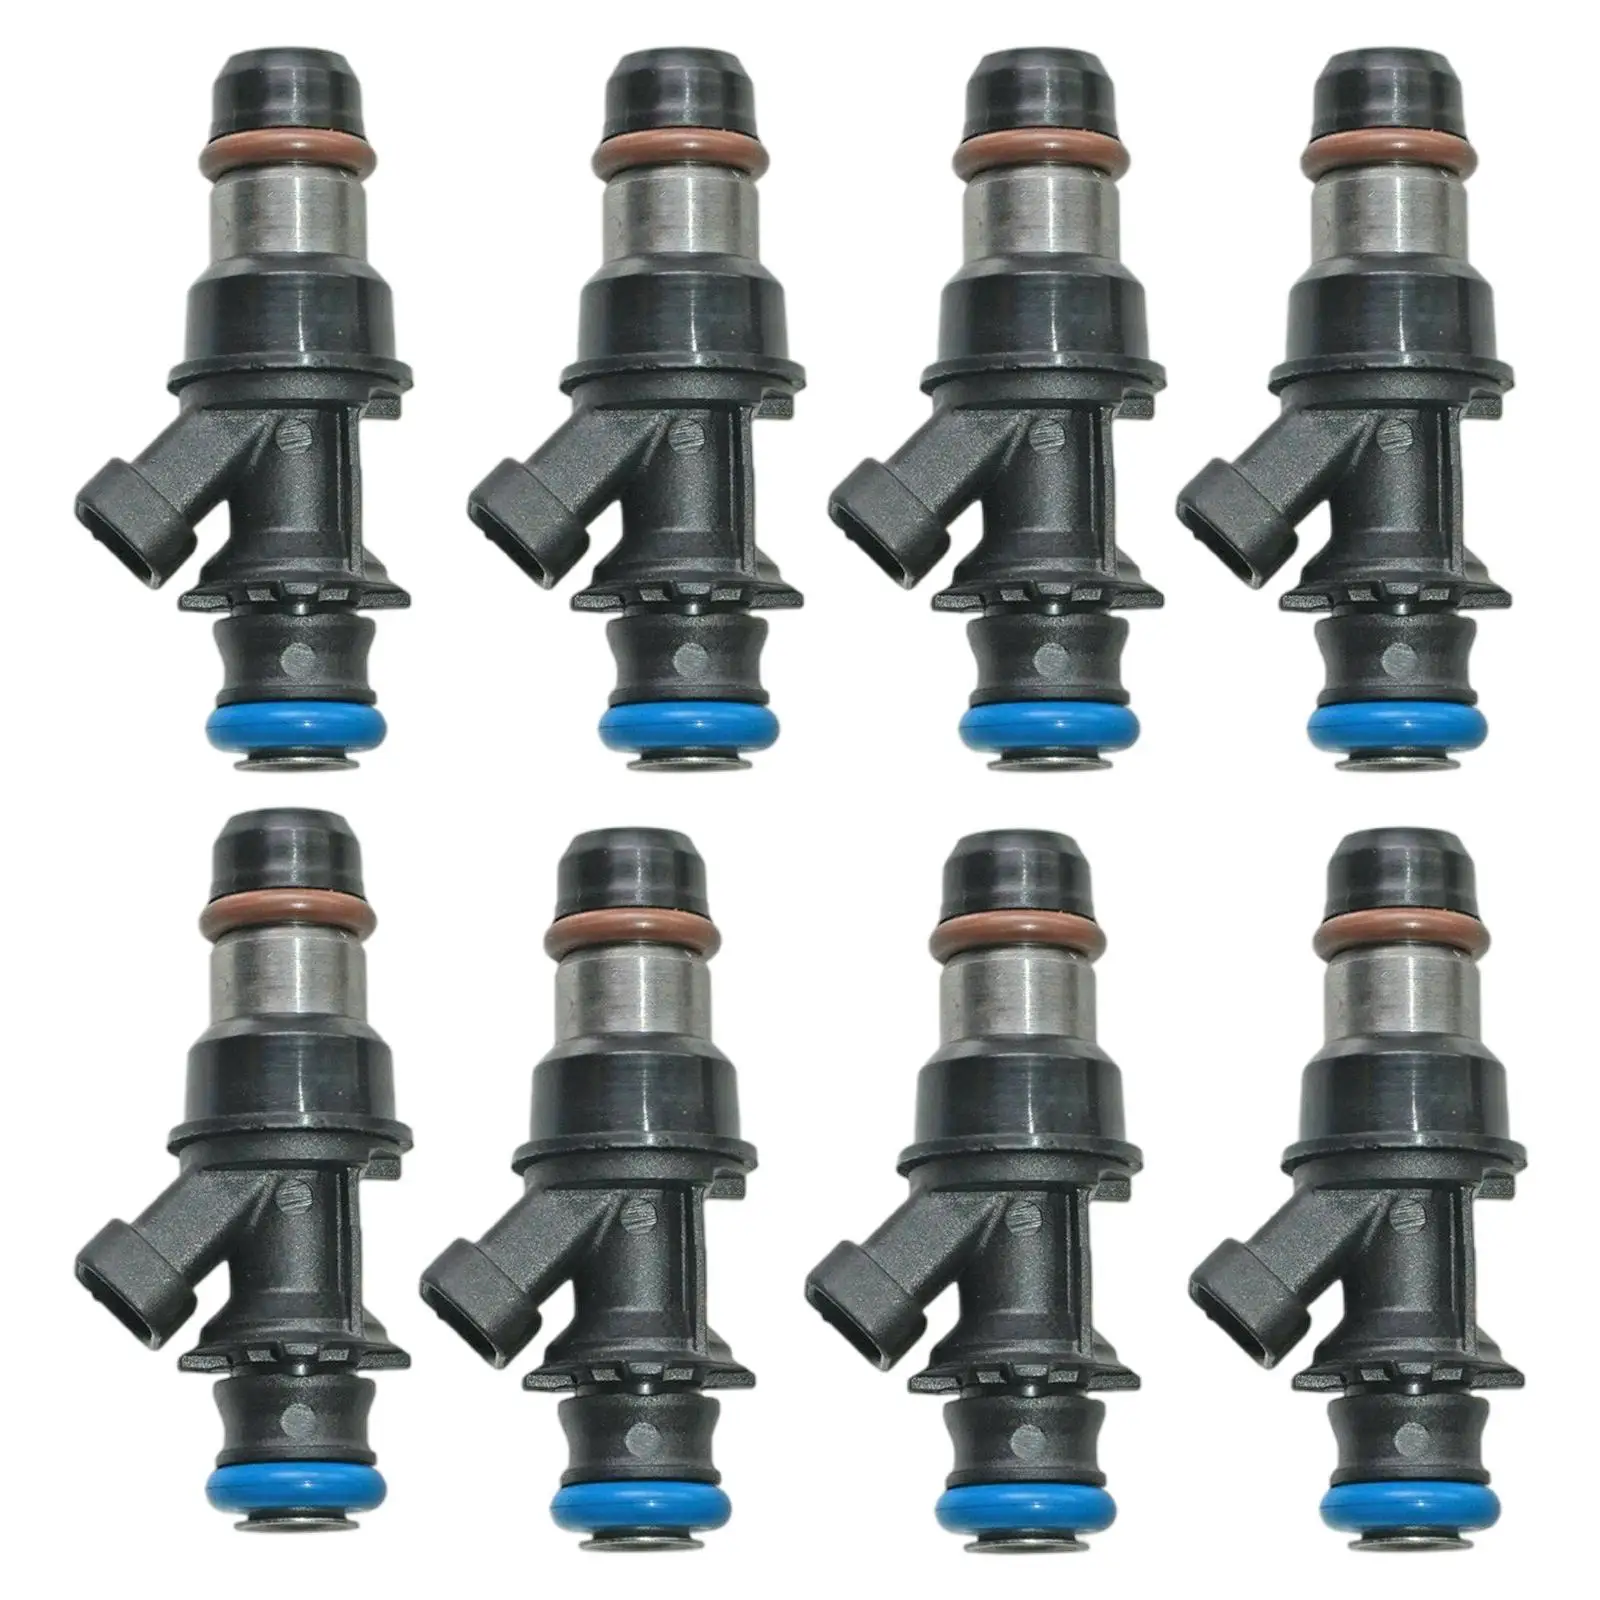 Set of 8 Fuel Injectors Car Supplies Vehicle Parts Black Replacement Fit for Cadillac V8-5.3L/6.0L 02-05 17113553 Accessories